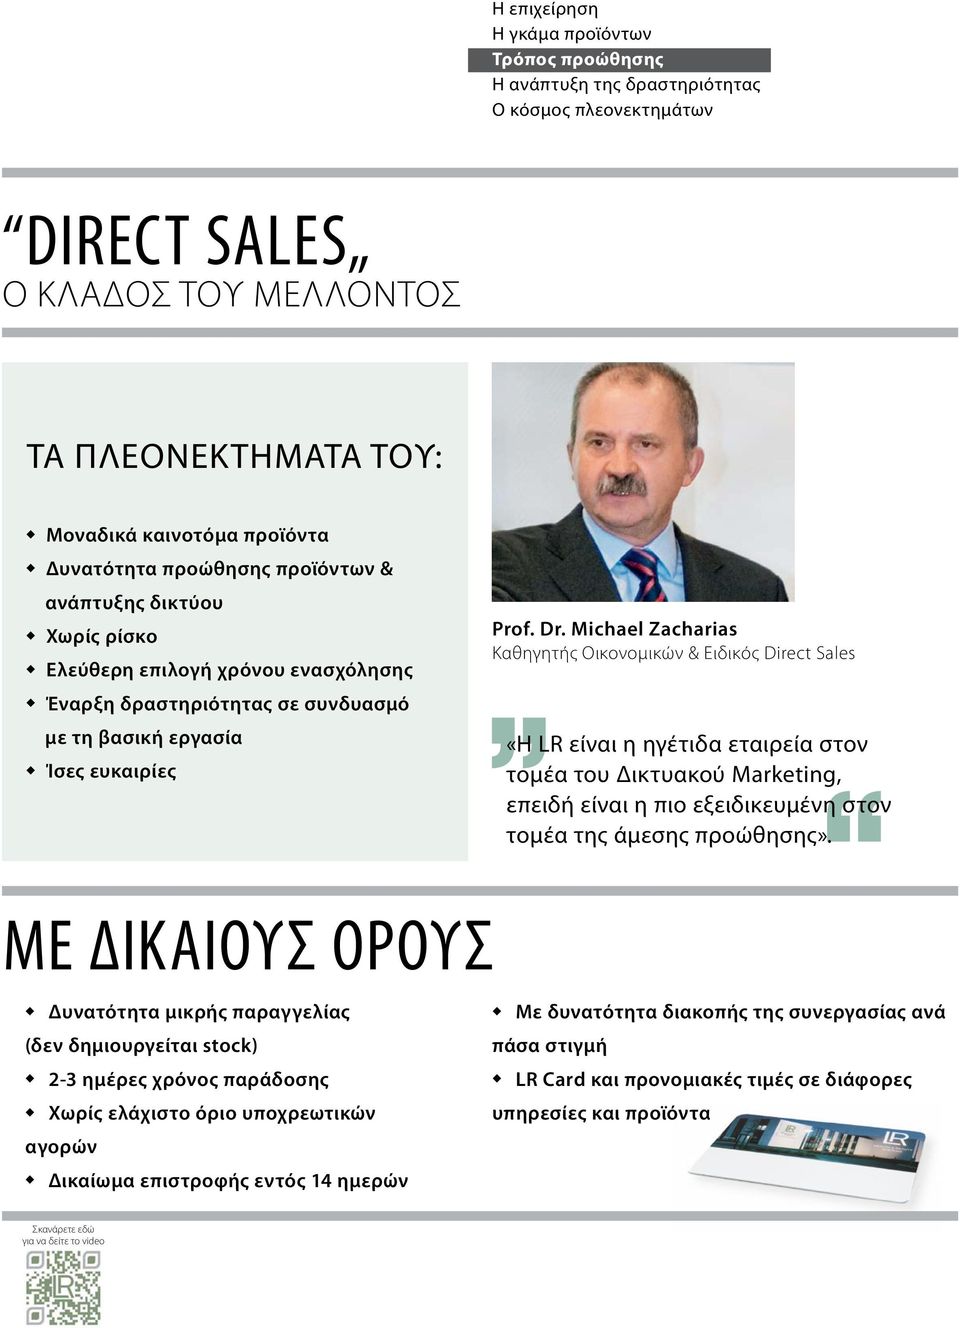 Michael Zacharias Καθηγητής Οικονομικών & Ειδικός Direct Sales Έναρξη δραστηριότητας σε συνδυασμό με τη βασική εργασία Ίσες ευκαιρίες «Η LR είναι η ηγέτιδα εταιρεία στον τομέα του δικτυακού